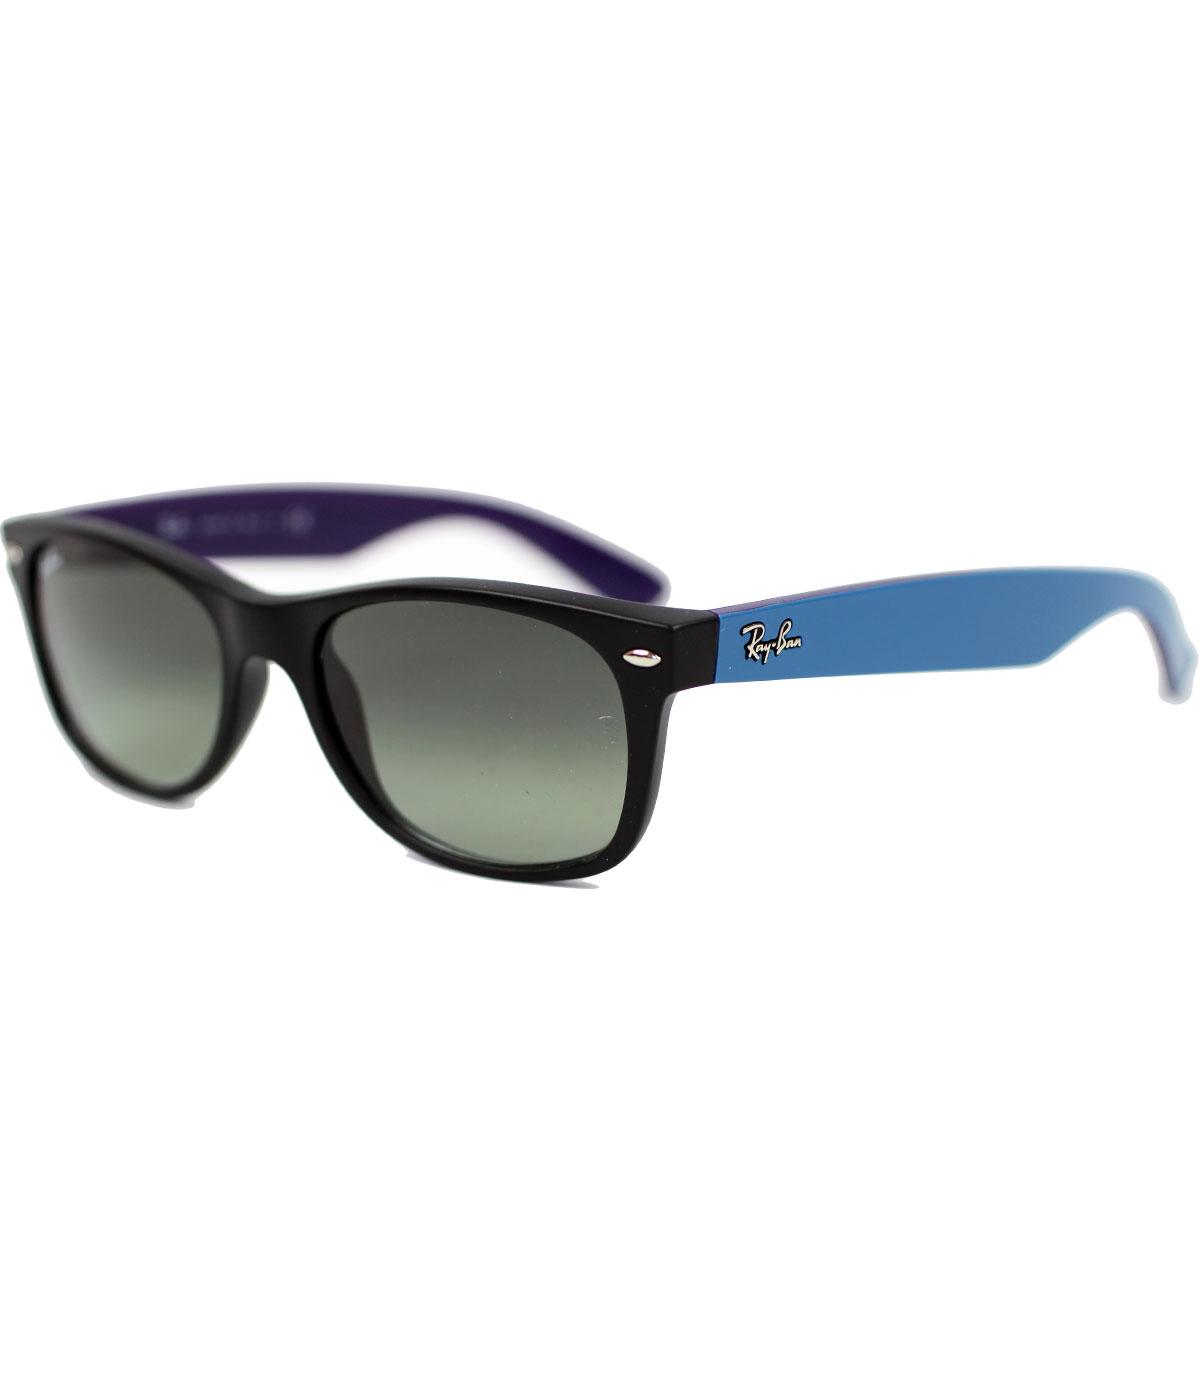 Ray-Ban New Wayfarer Retro Mod 2-Tone Sunglasses Black/Blue